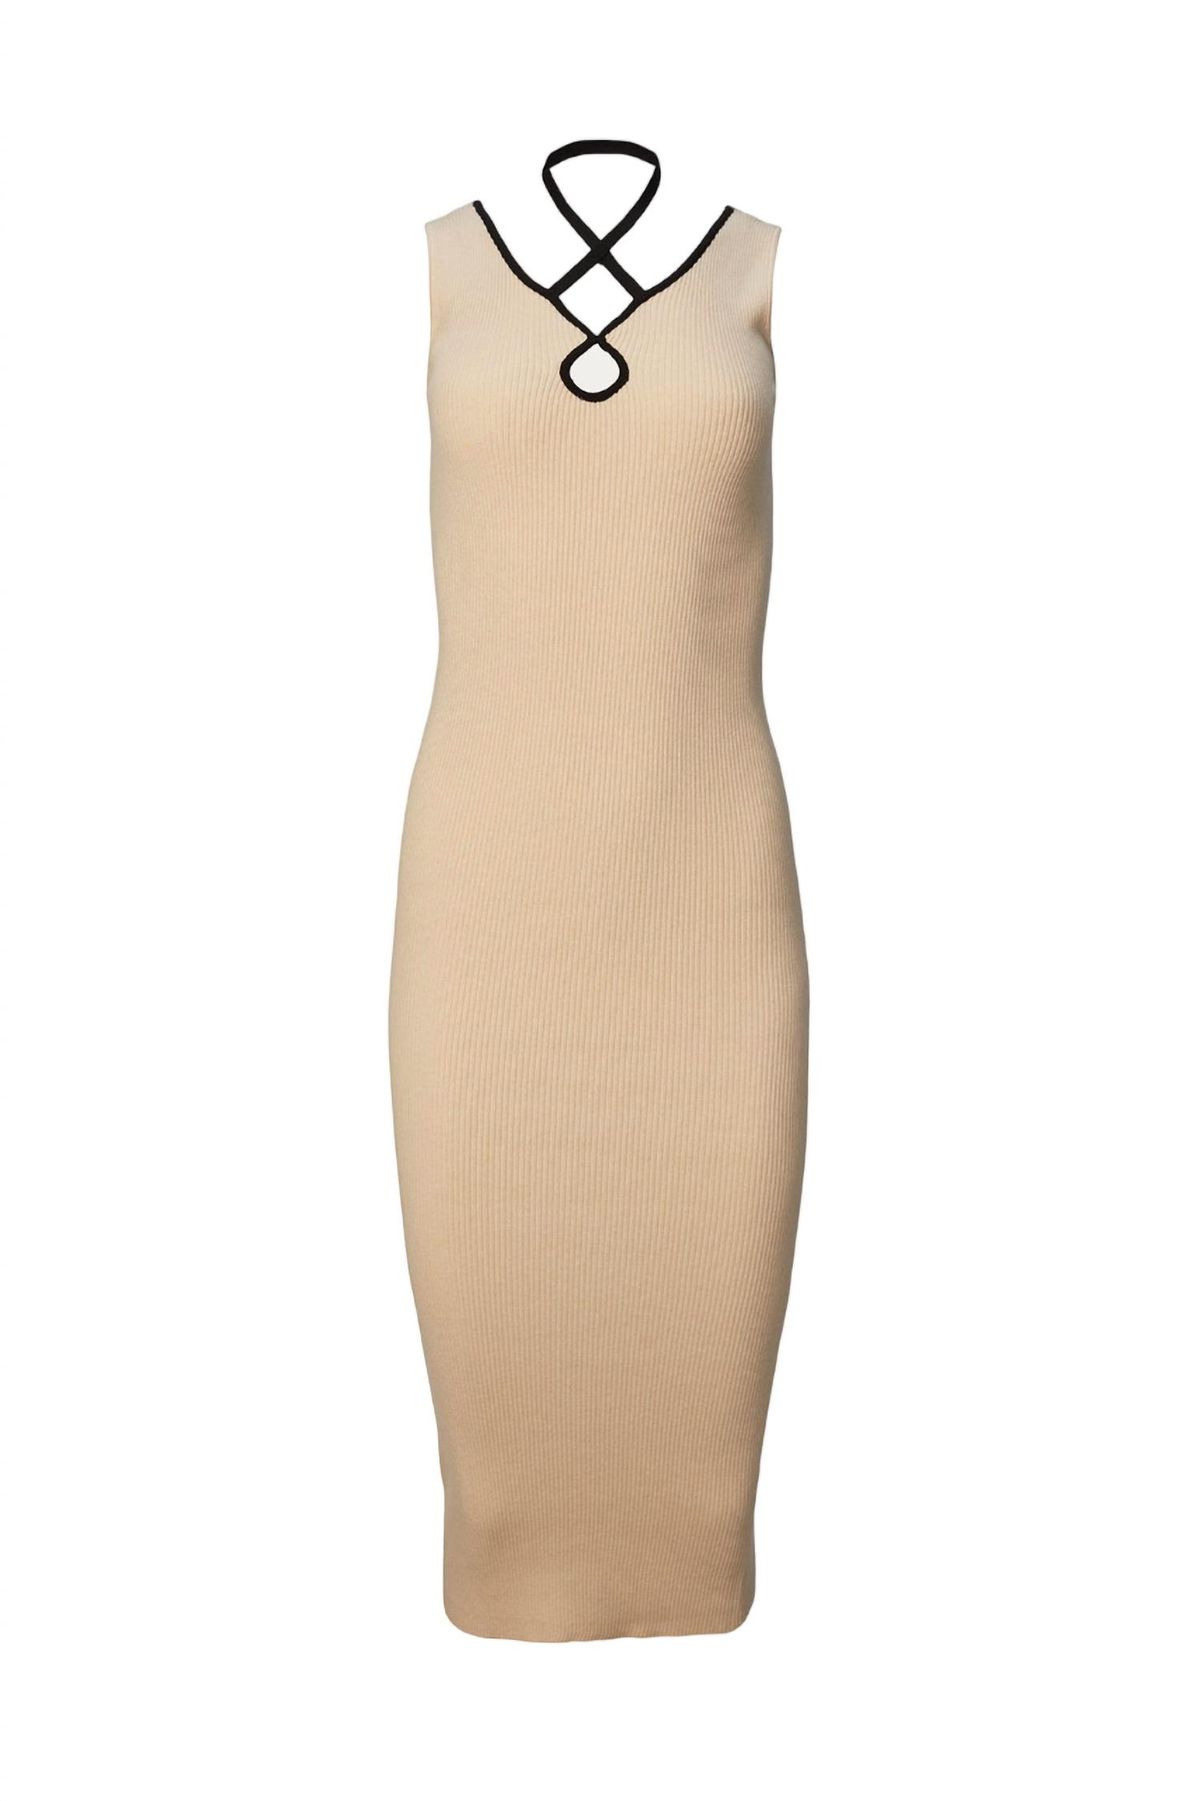 Style 1-1010215816-3855 WYNN HAMLYN Size XS Nude Cocktail Dress on Queenly